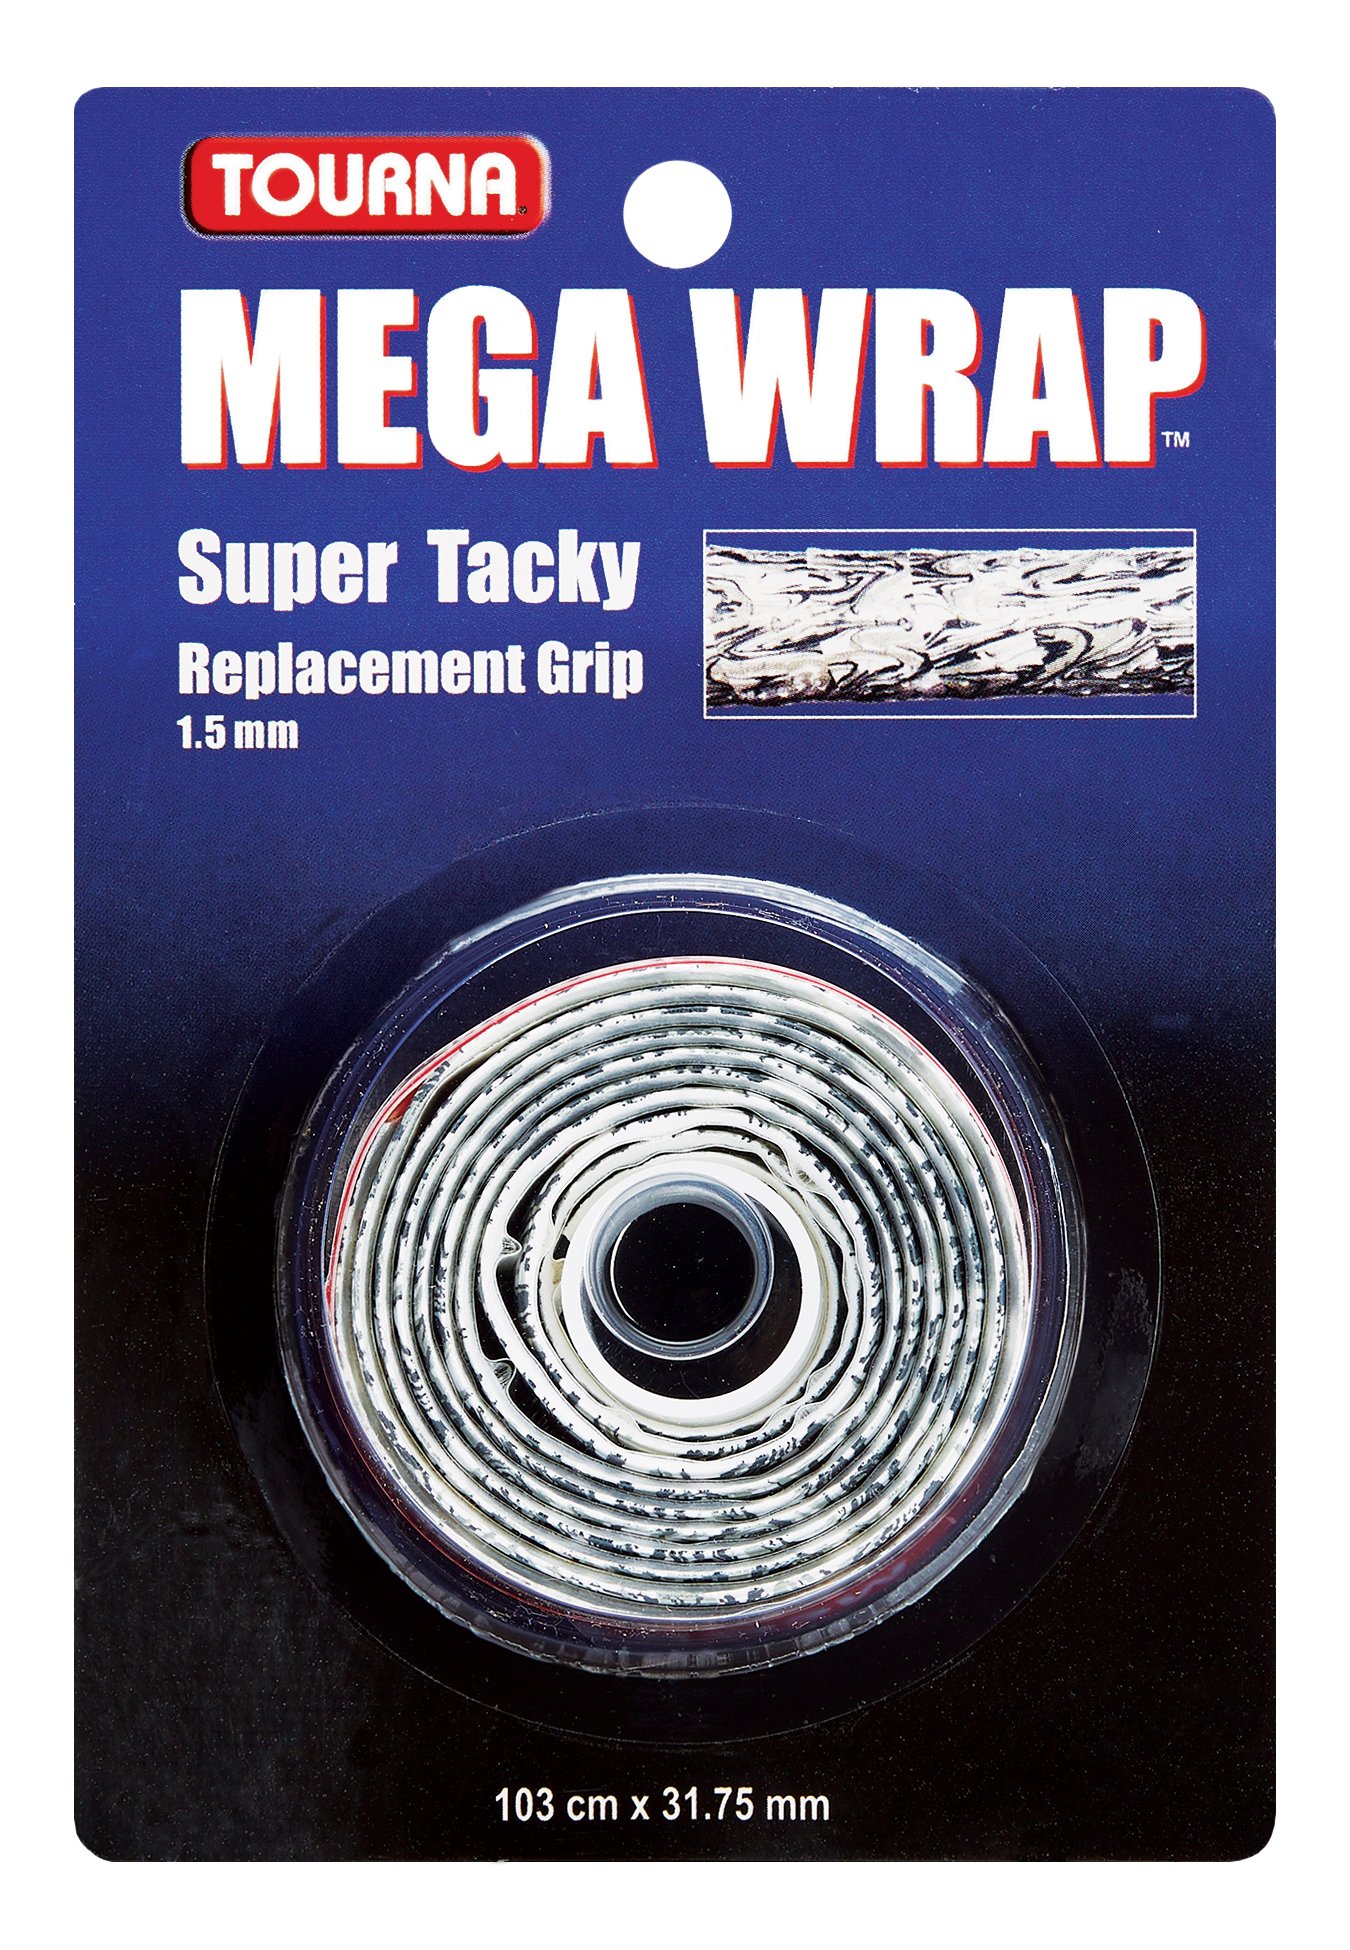 2x Unique Tourna Mega Wrap Tacky Tennis Replacement Cushion Grip Stars & Stripes for sale online 